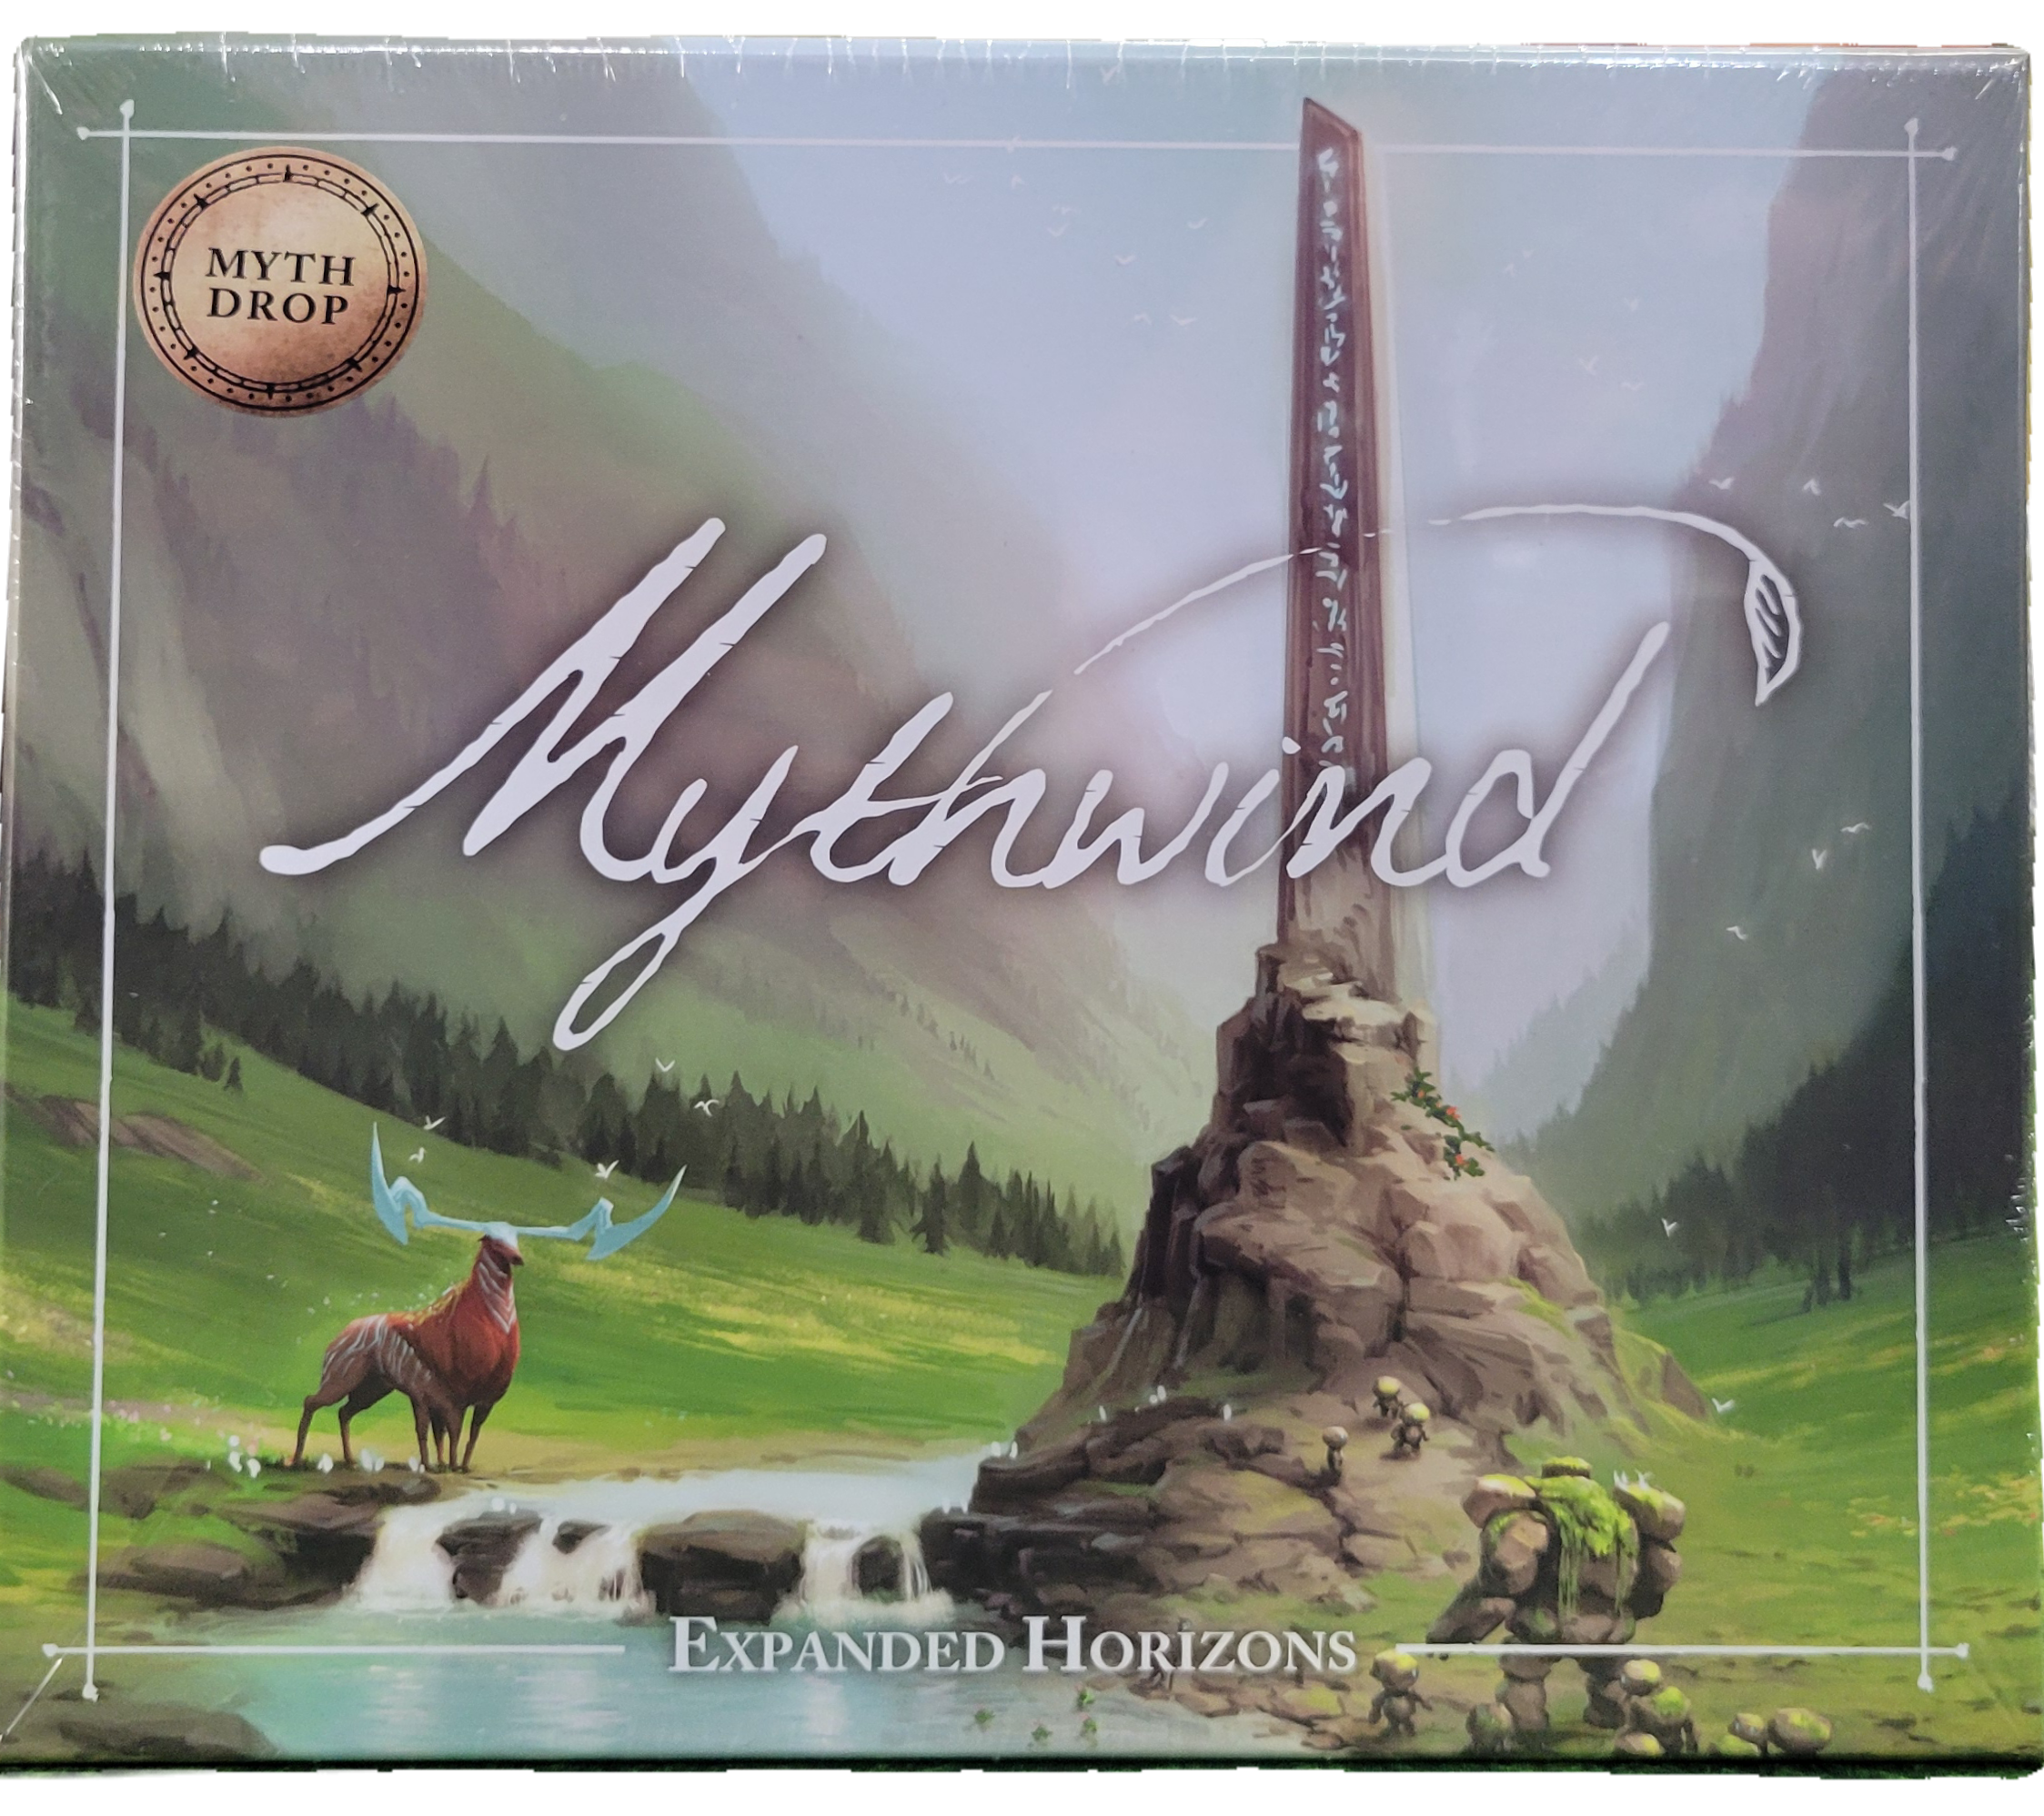 Mythwind: Expanded Horizons (Mythdrop Edition) - Bards & Cards